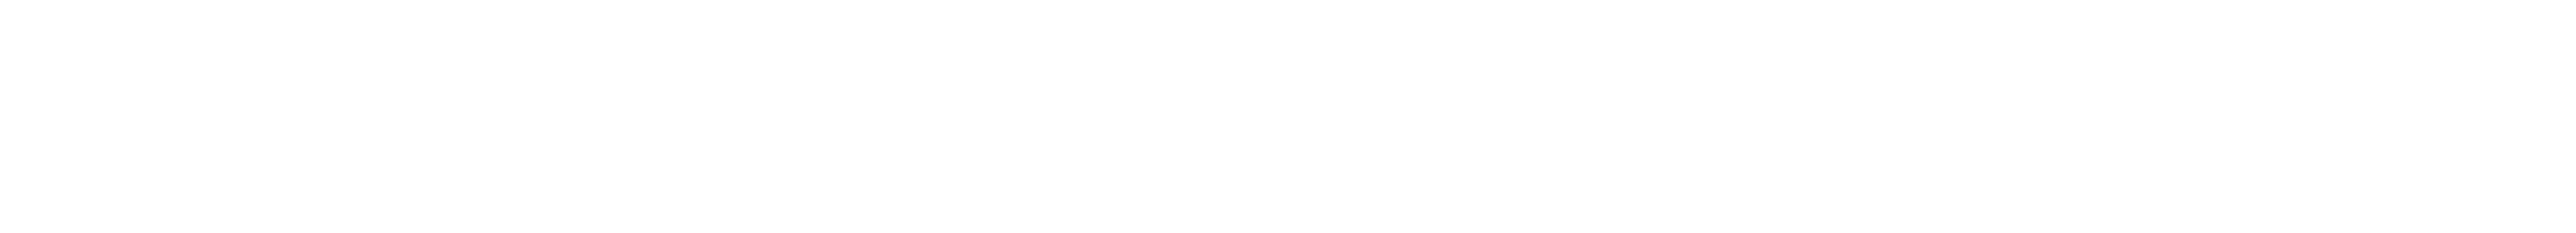 Techsign DOC white logo